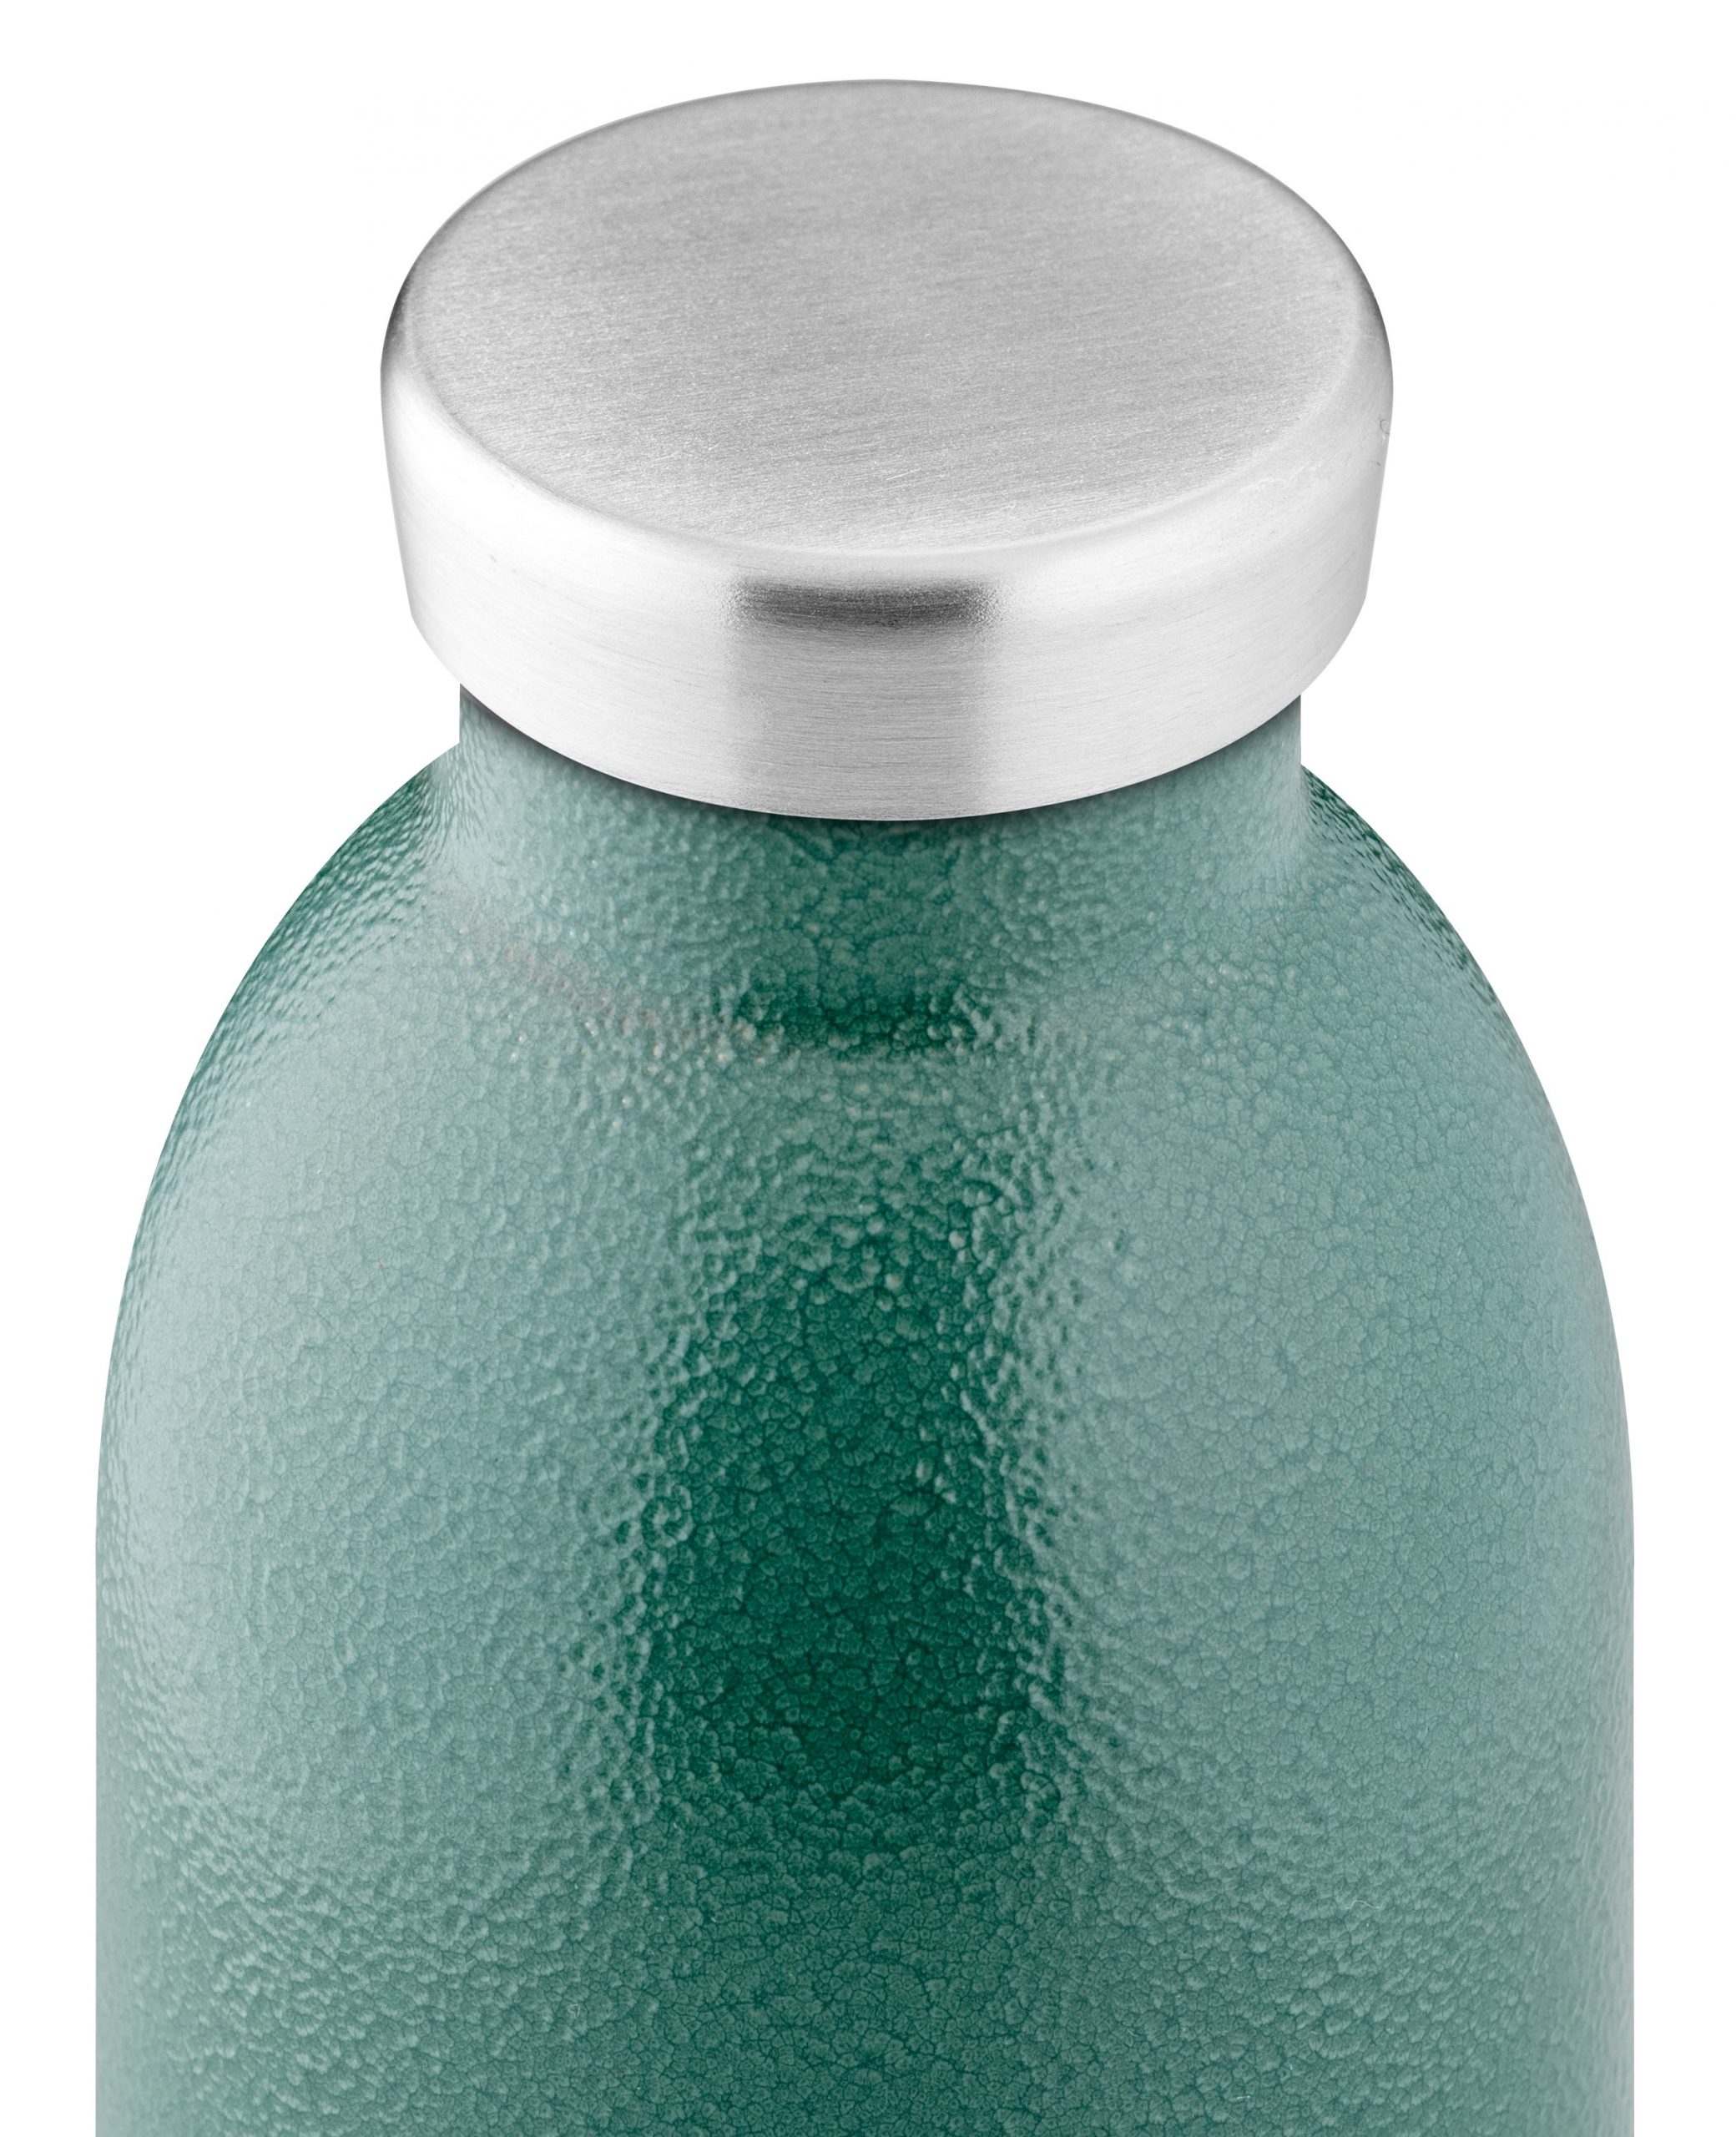 24bottles® Clima Bottle 500ml –  Moss Green